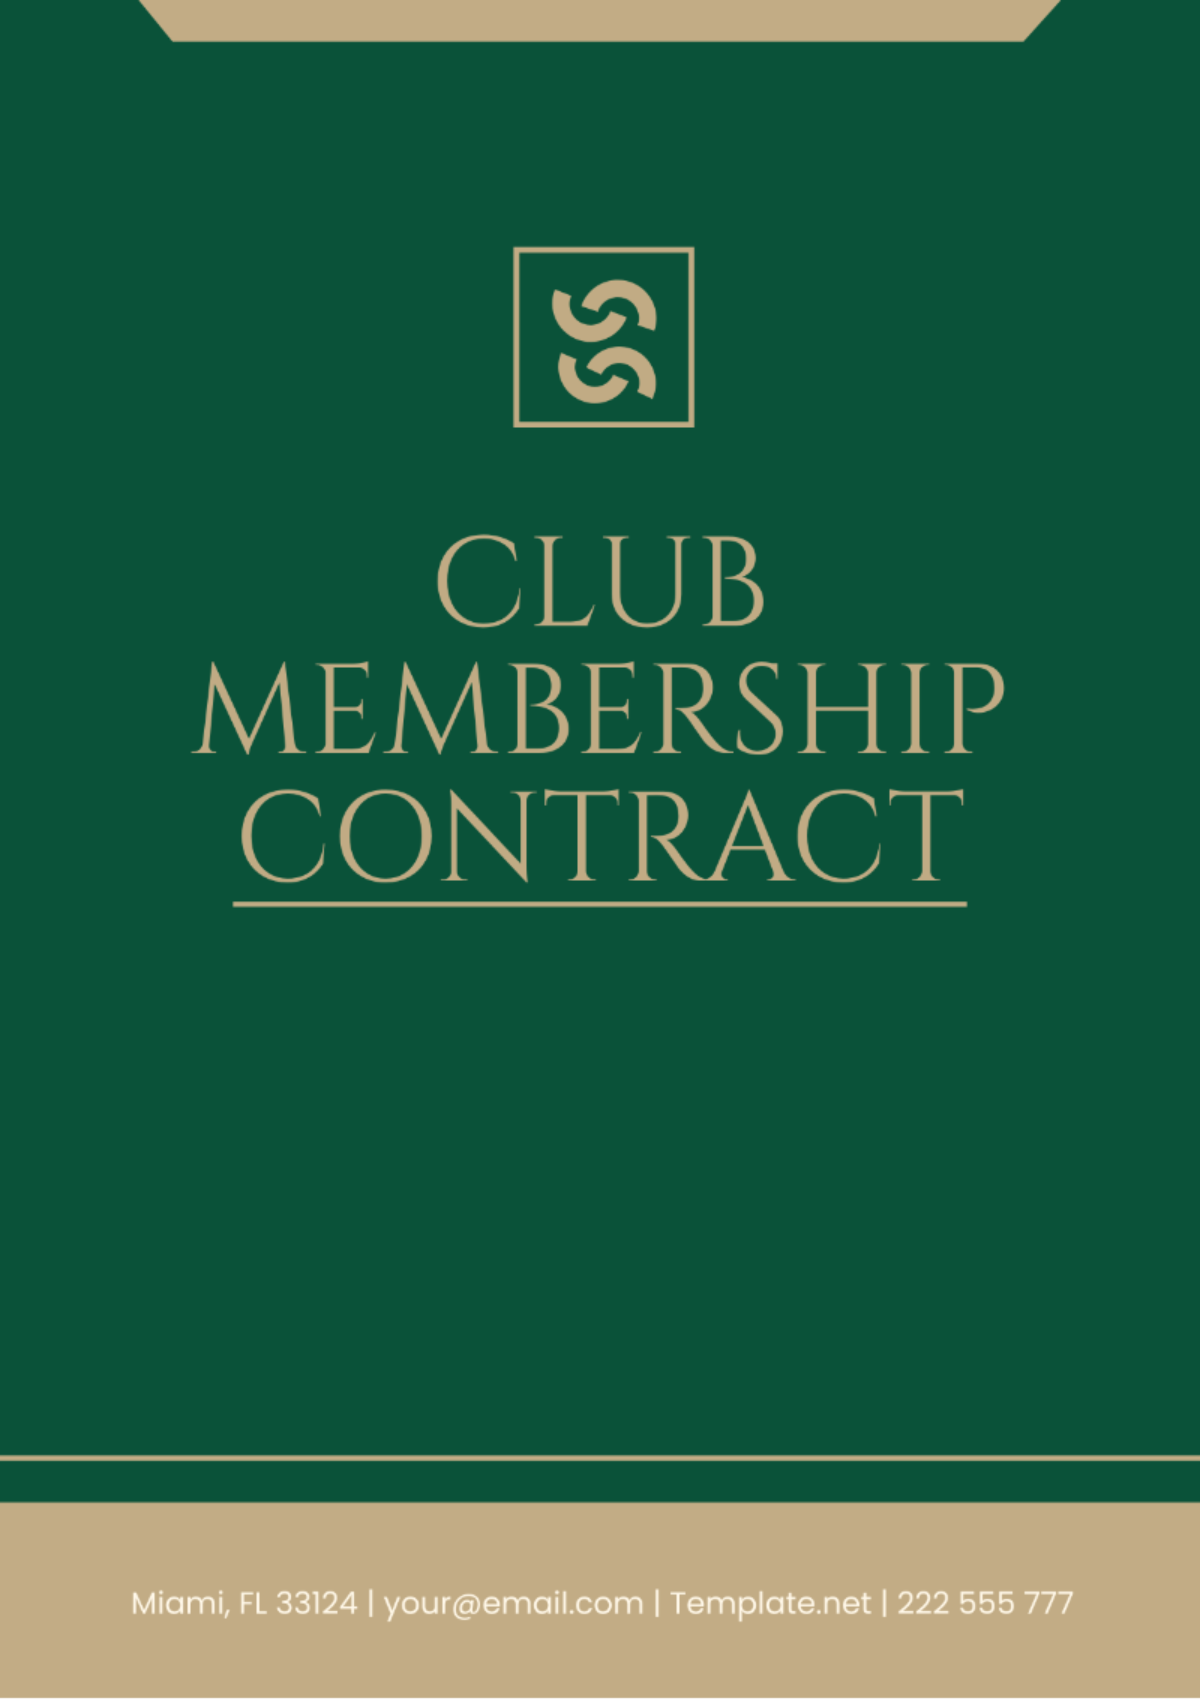 Club Membership Contract Template